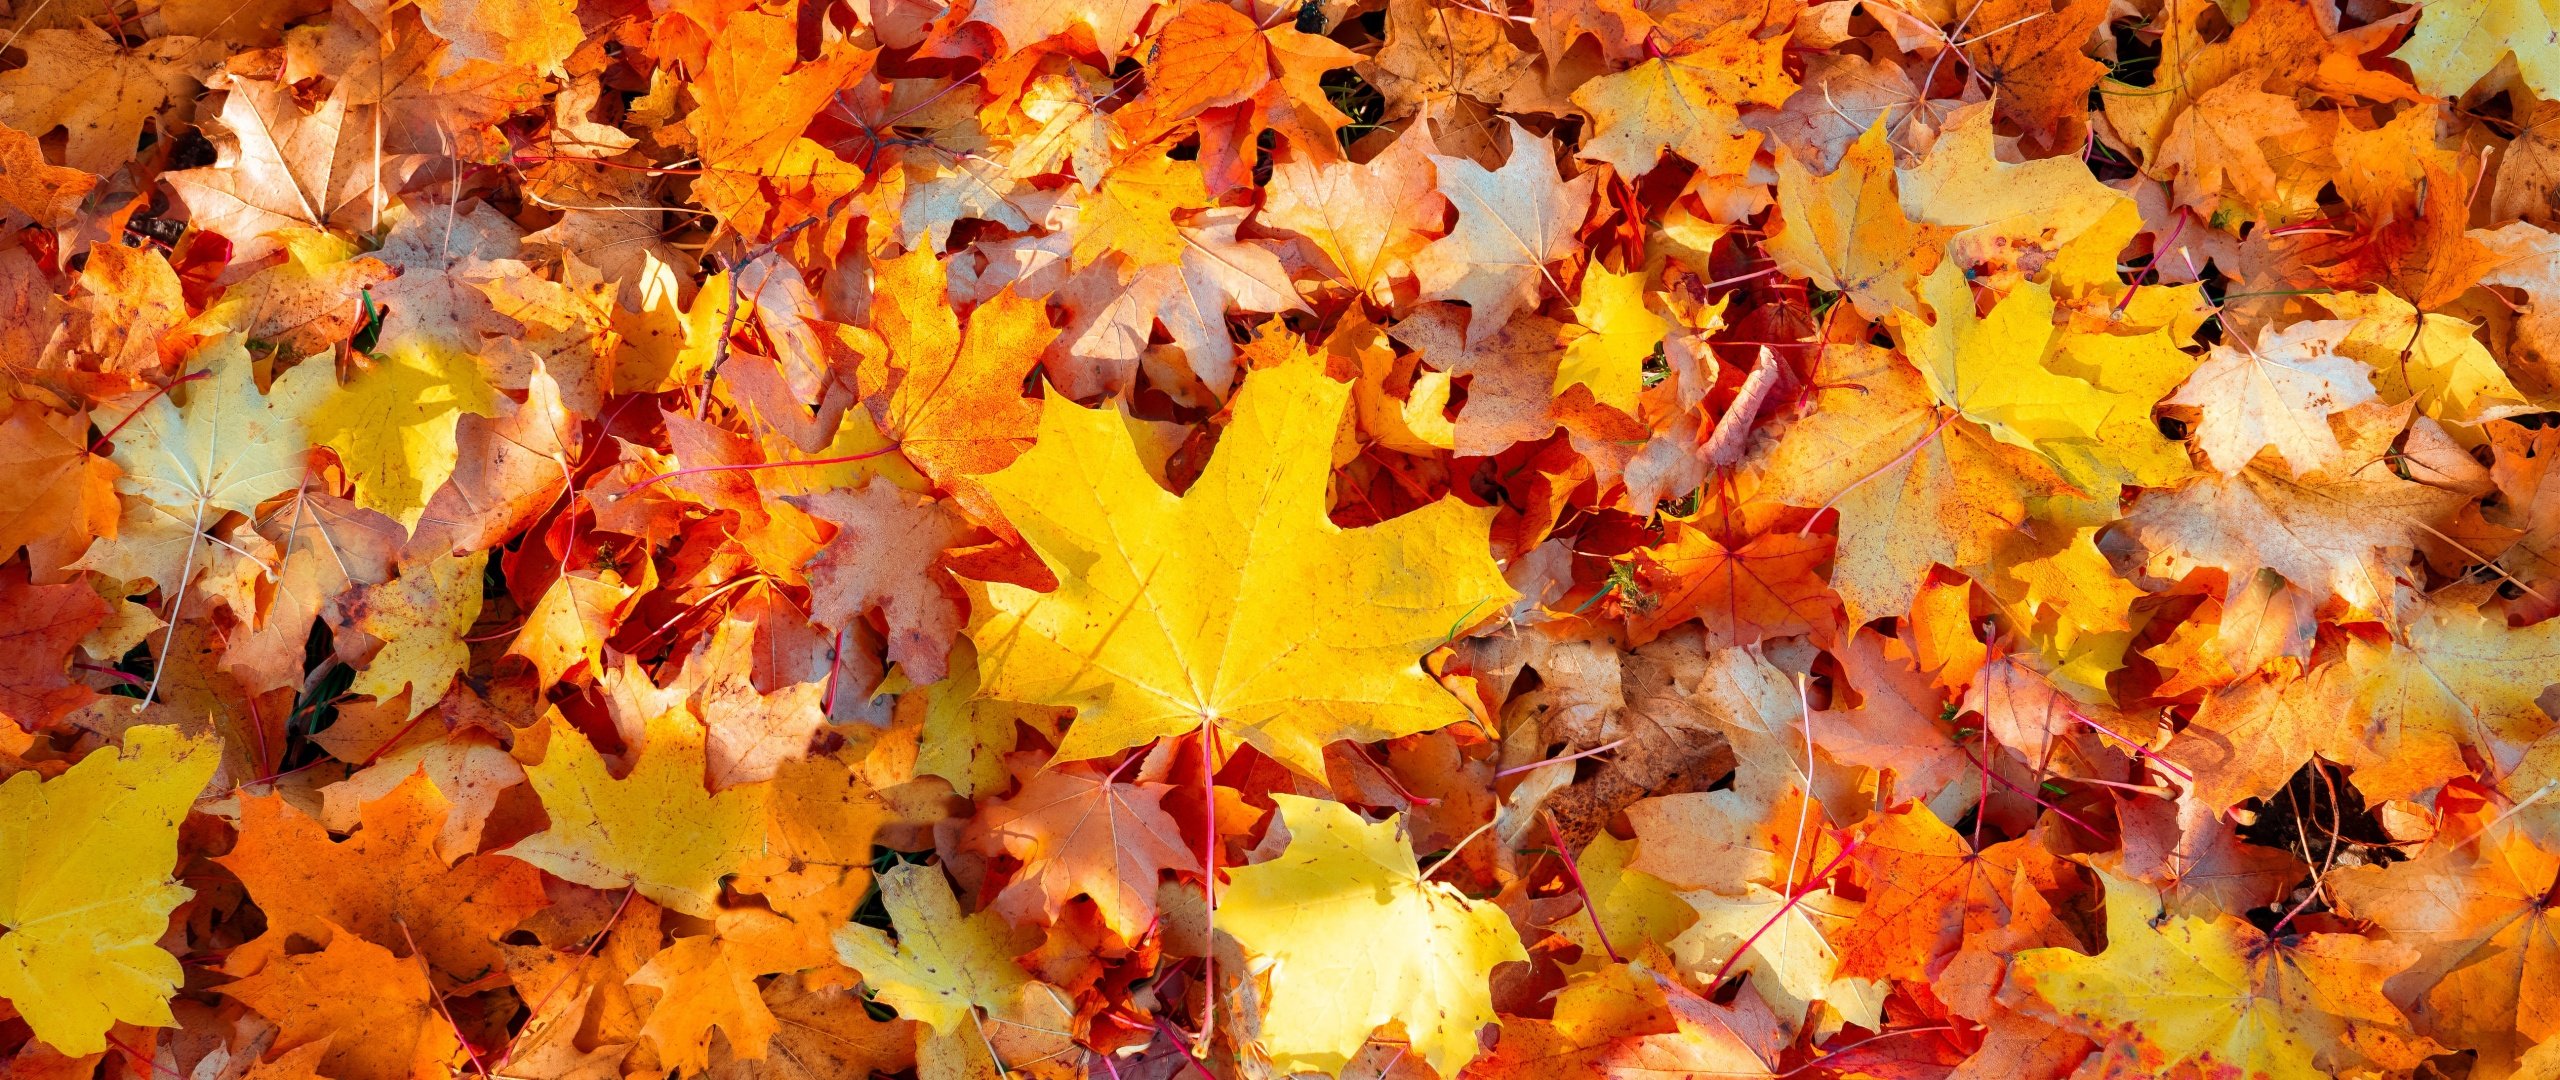 Maple leaves Wallpaper 4K, Autumn leaves, Fallen Leaves, Leaf Background, Nature